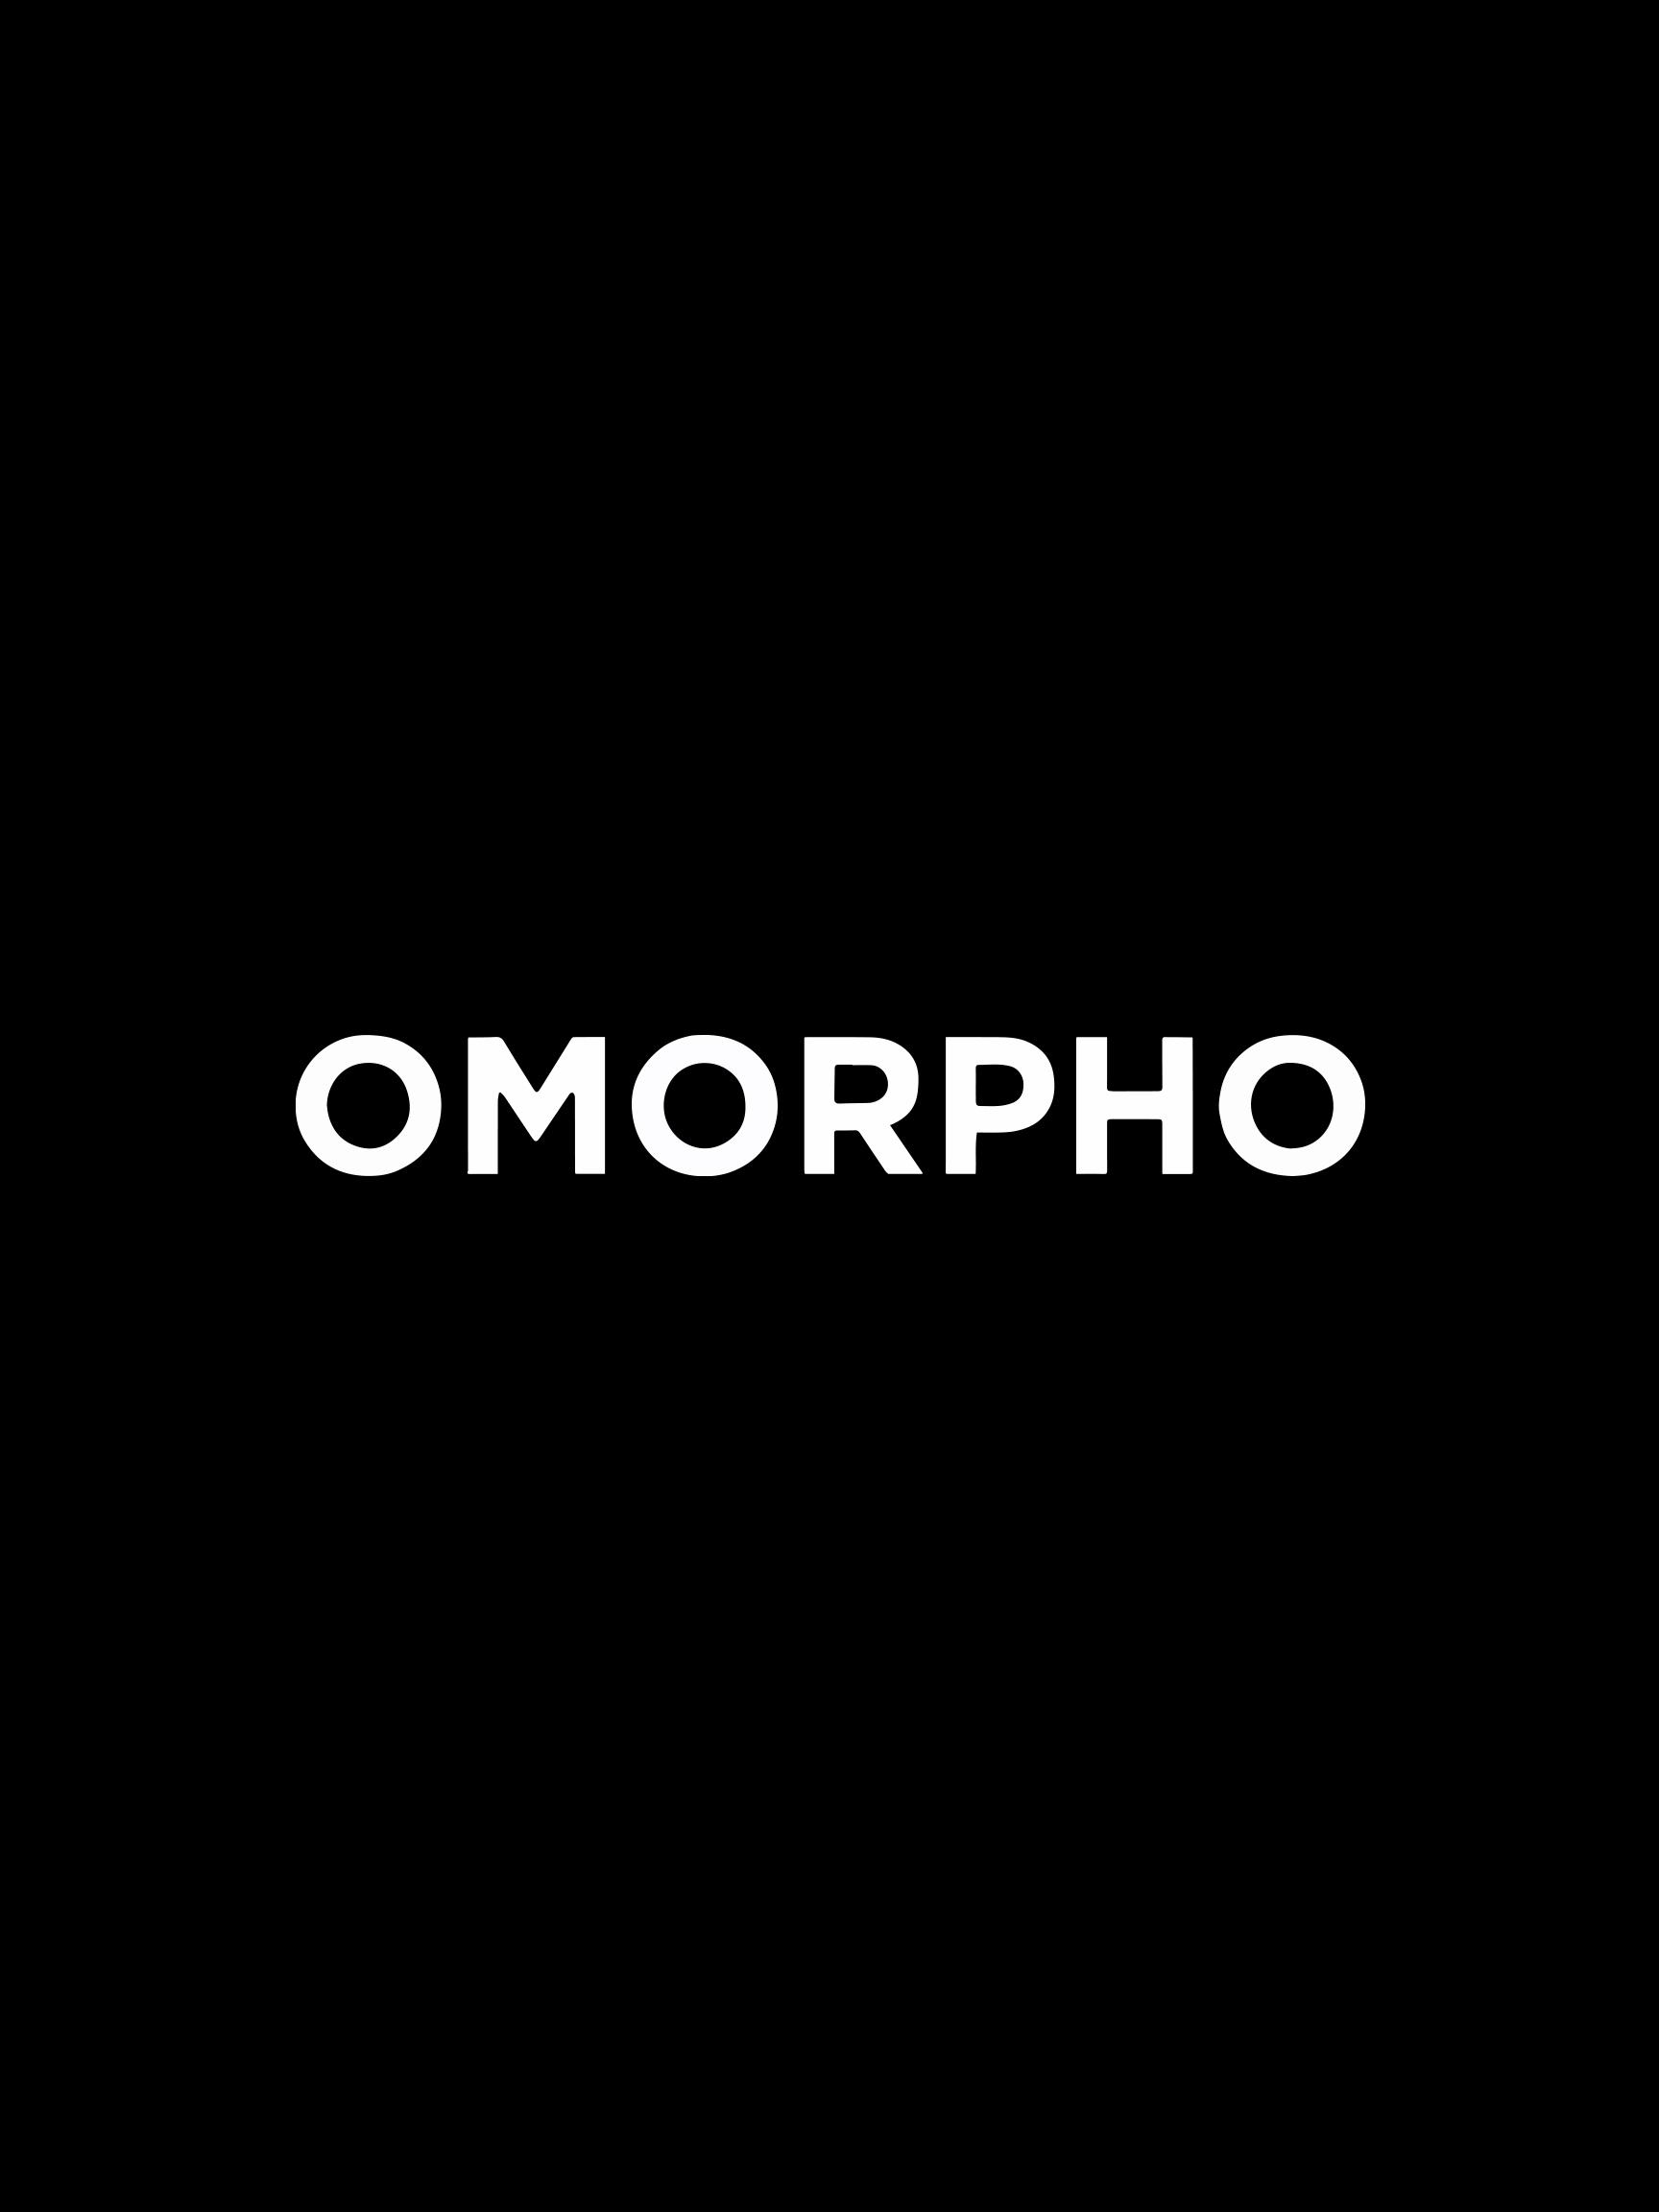 omorpho logo 2x